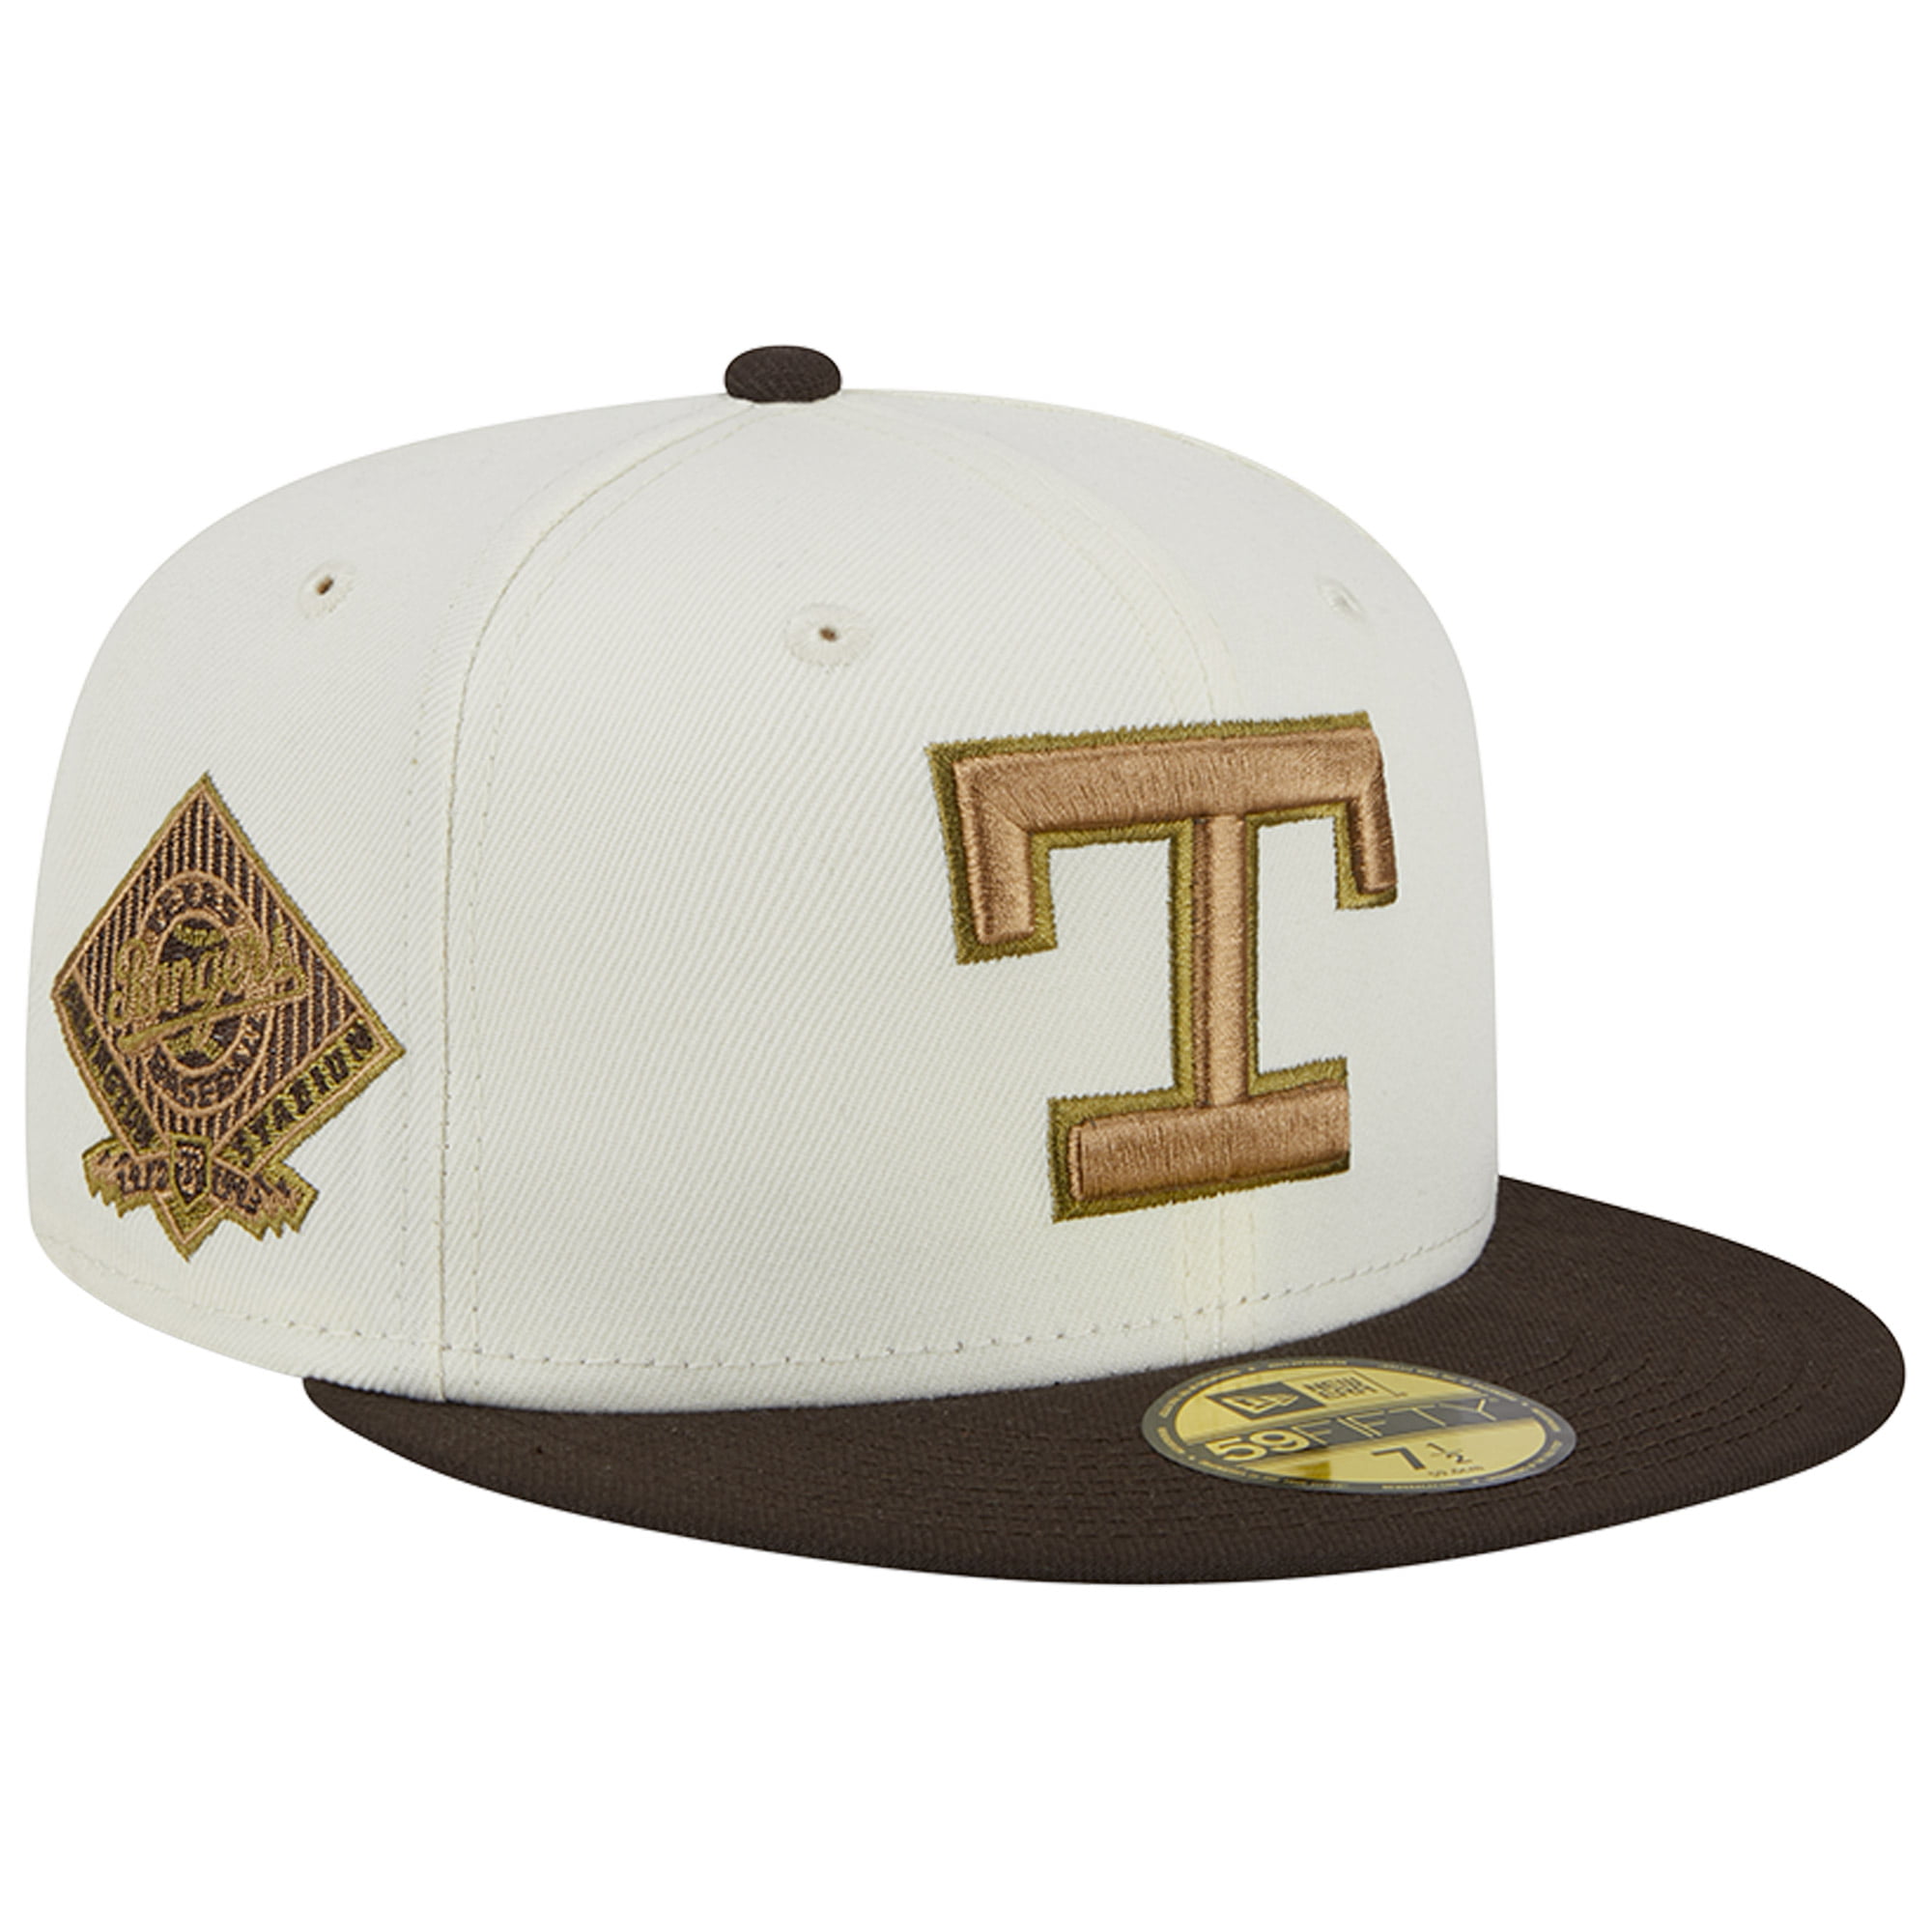 Men's New Era White/Brown Texas Rangers Arlington Stadium 59FIFTY Fitted Hat  